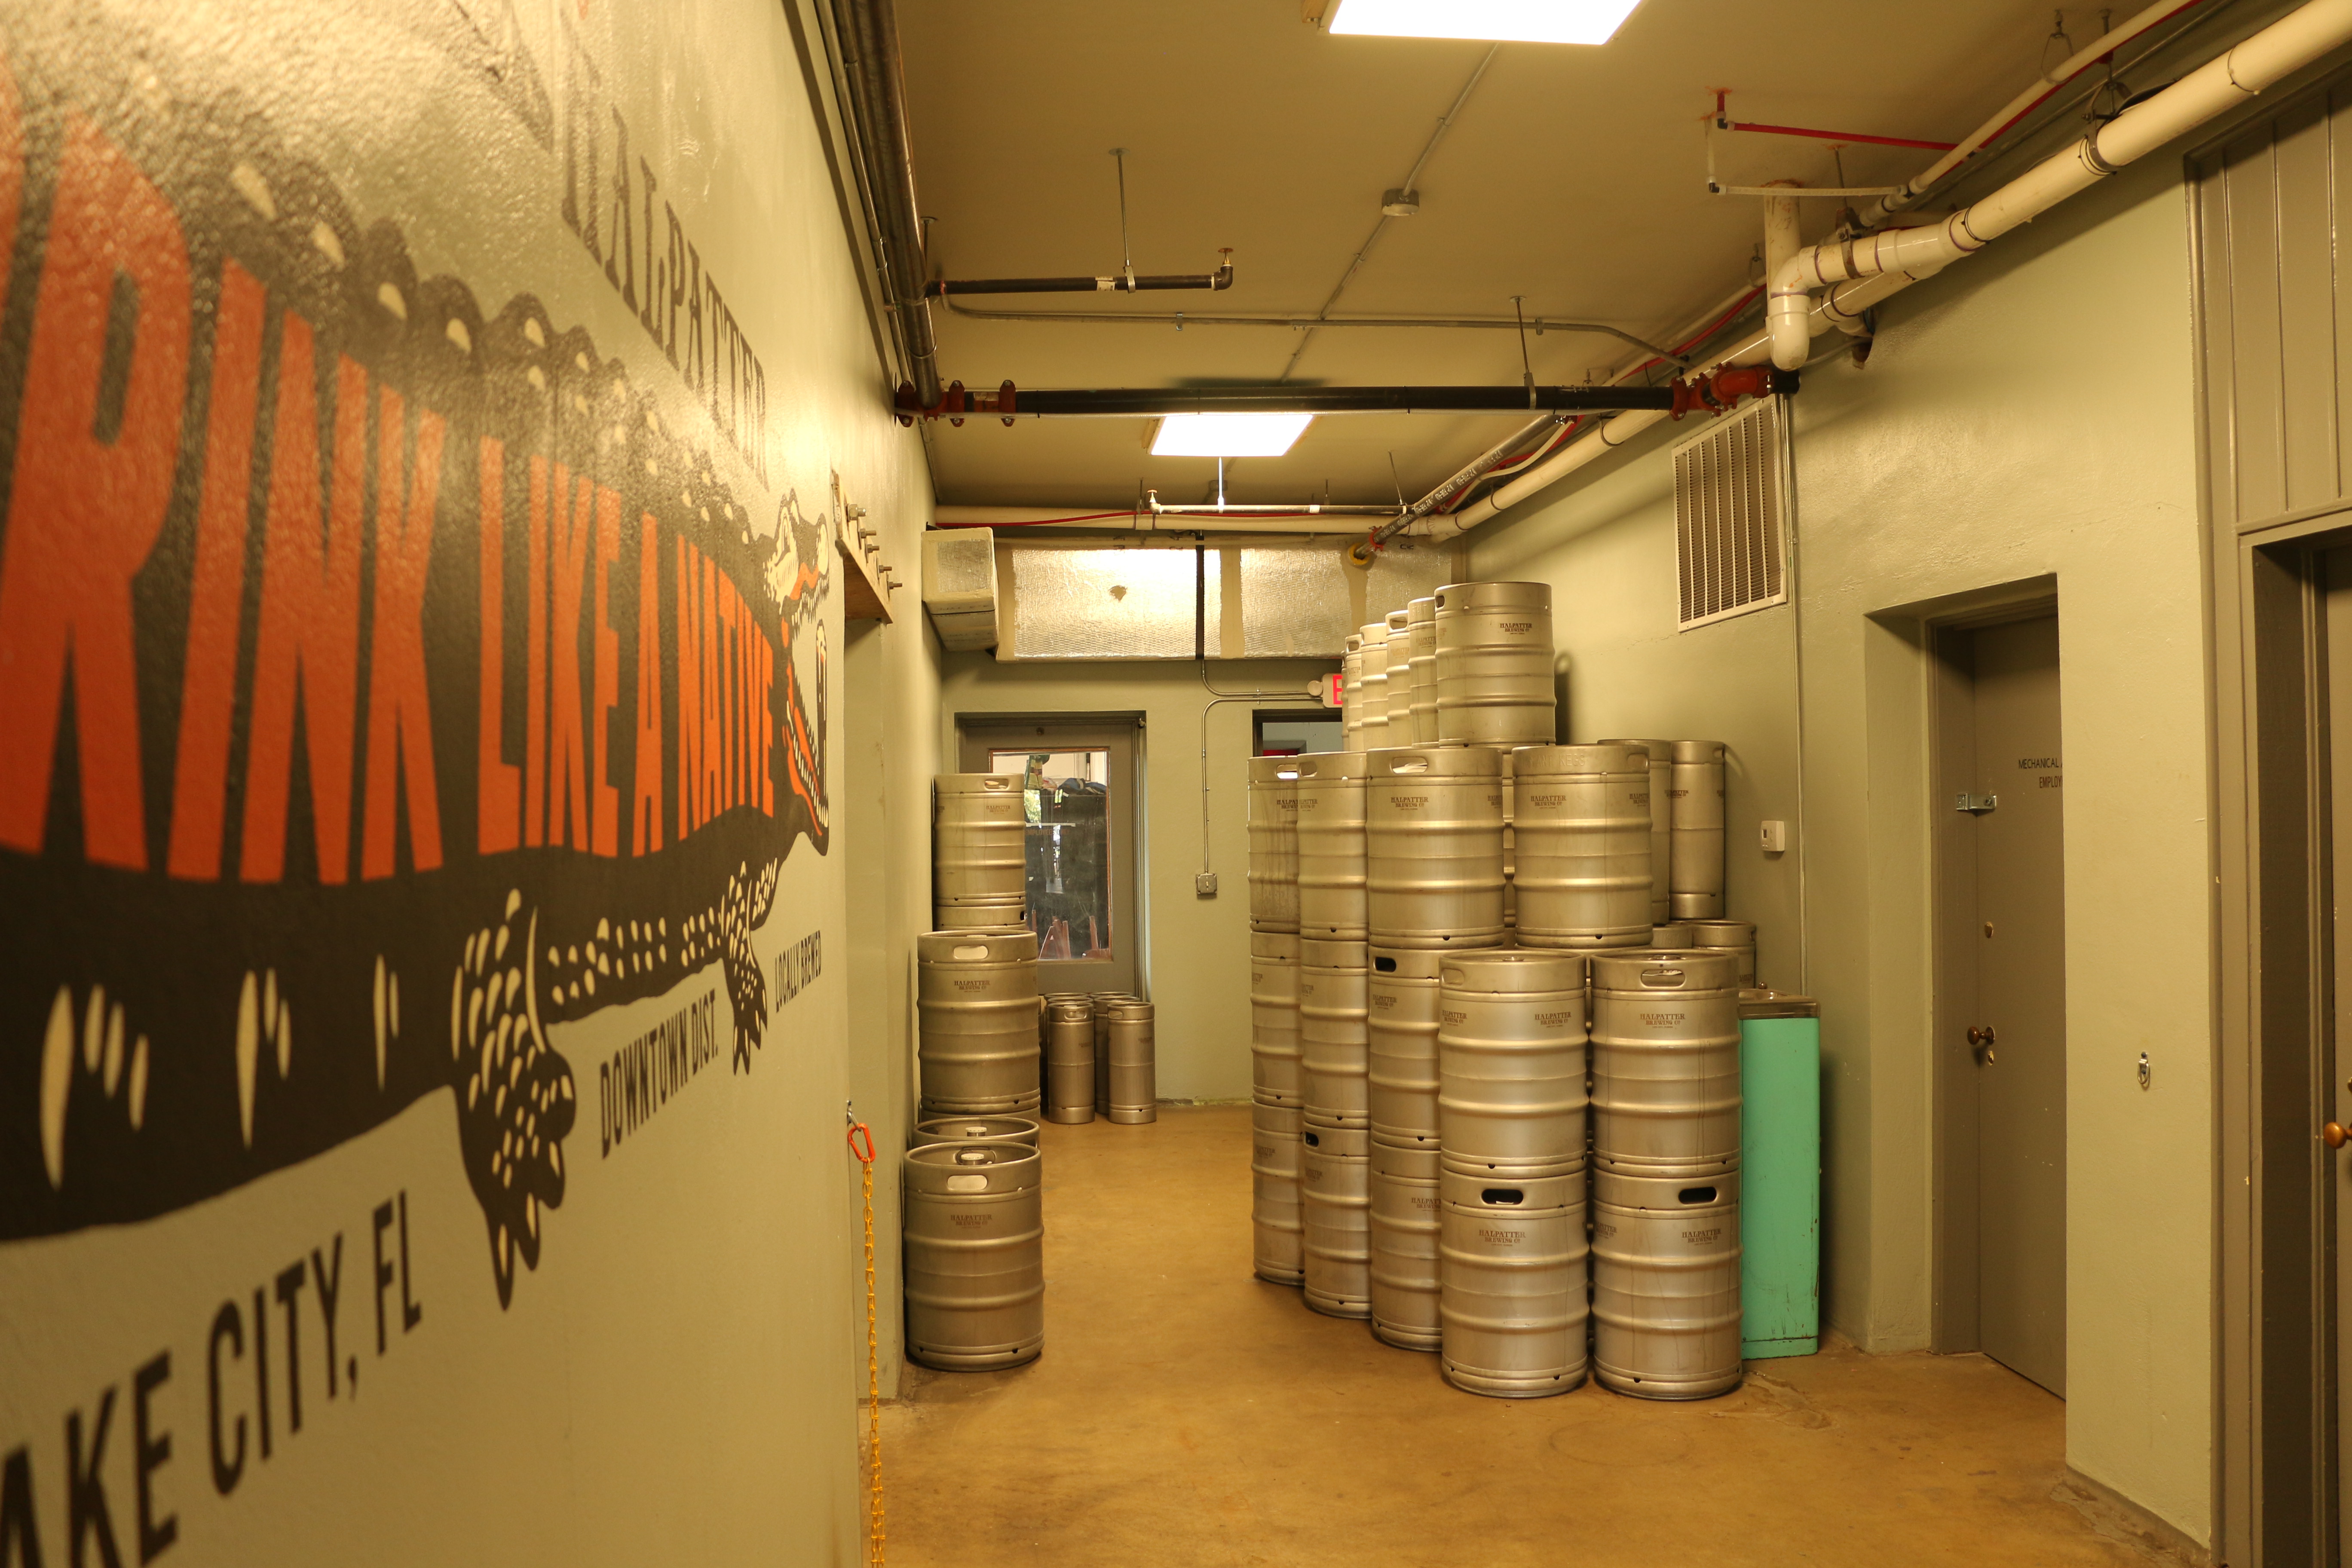 The keg hallway at Halpatter Brewing Company